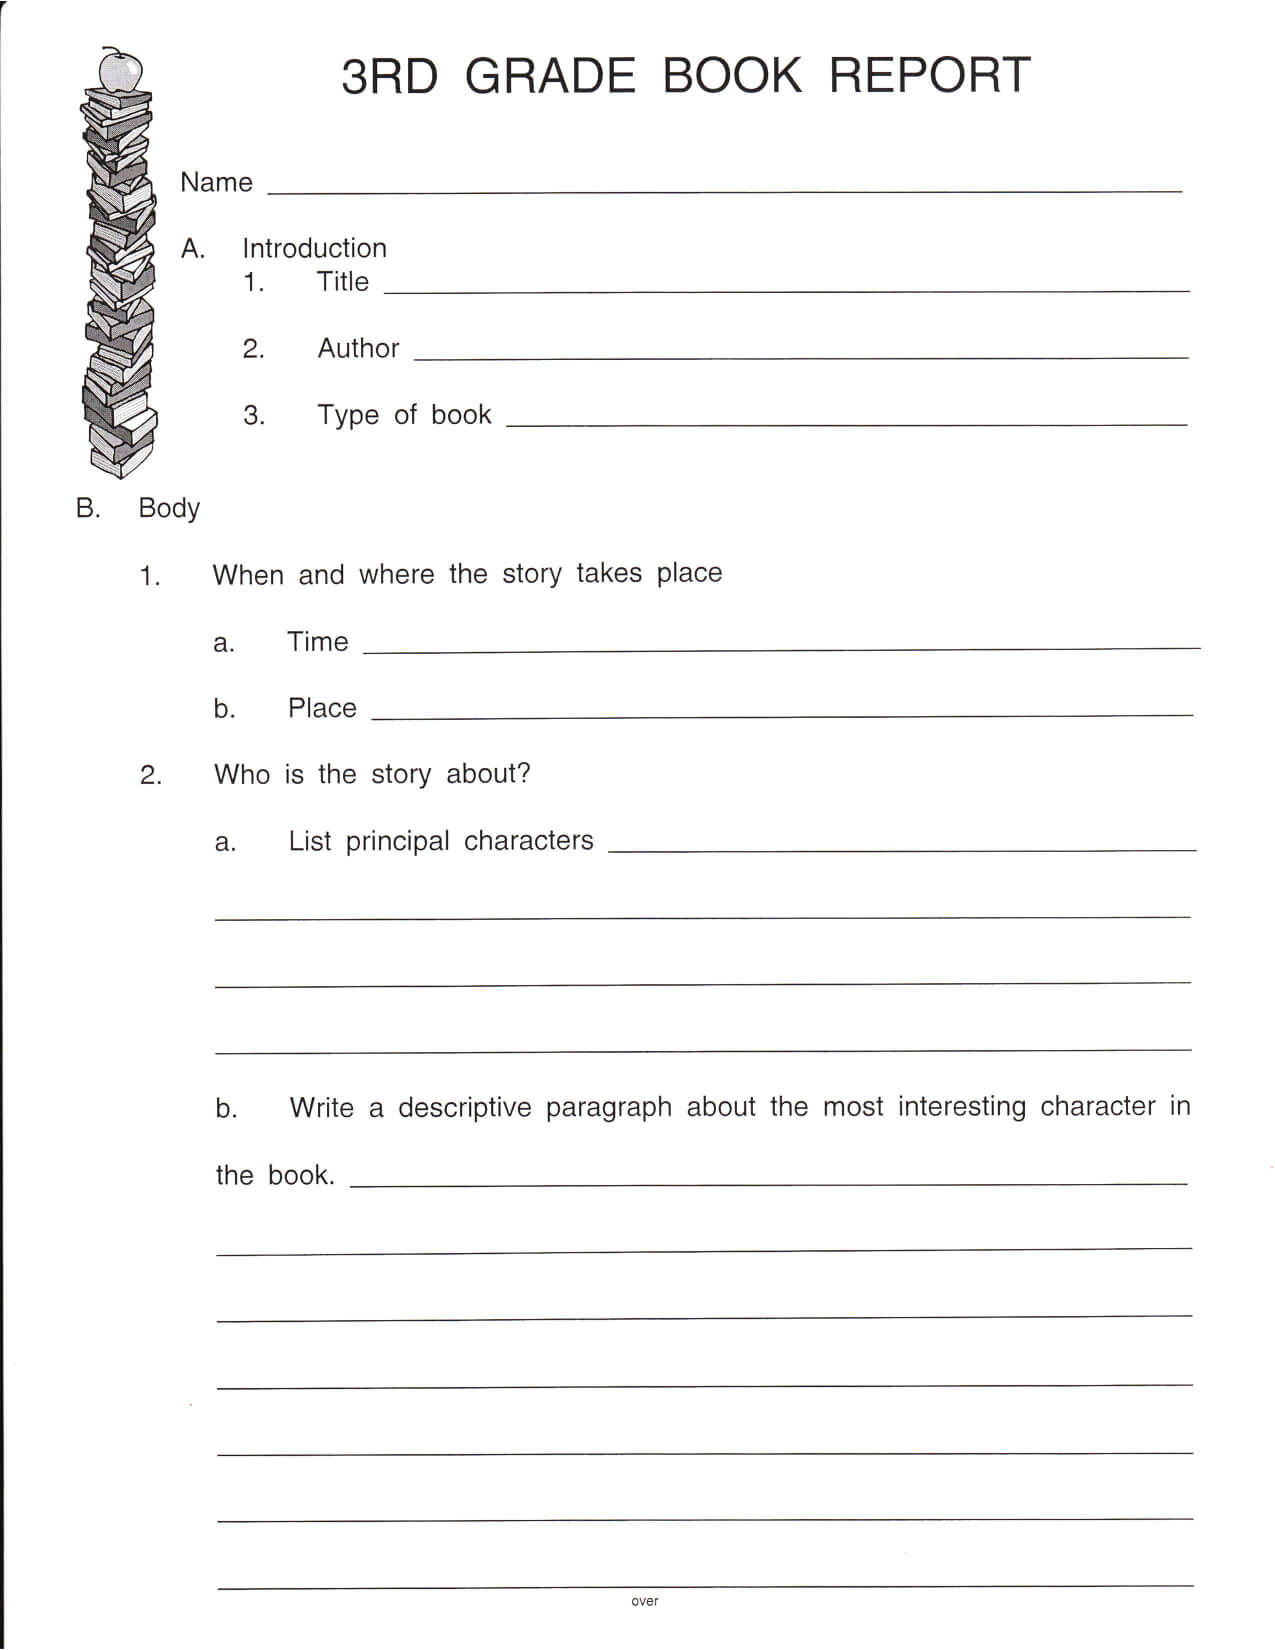 Pinshelena Schweitzer On Classroom Reading | 3Rd Grade With Regard To 4Th Grade Book Report Template